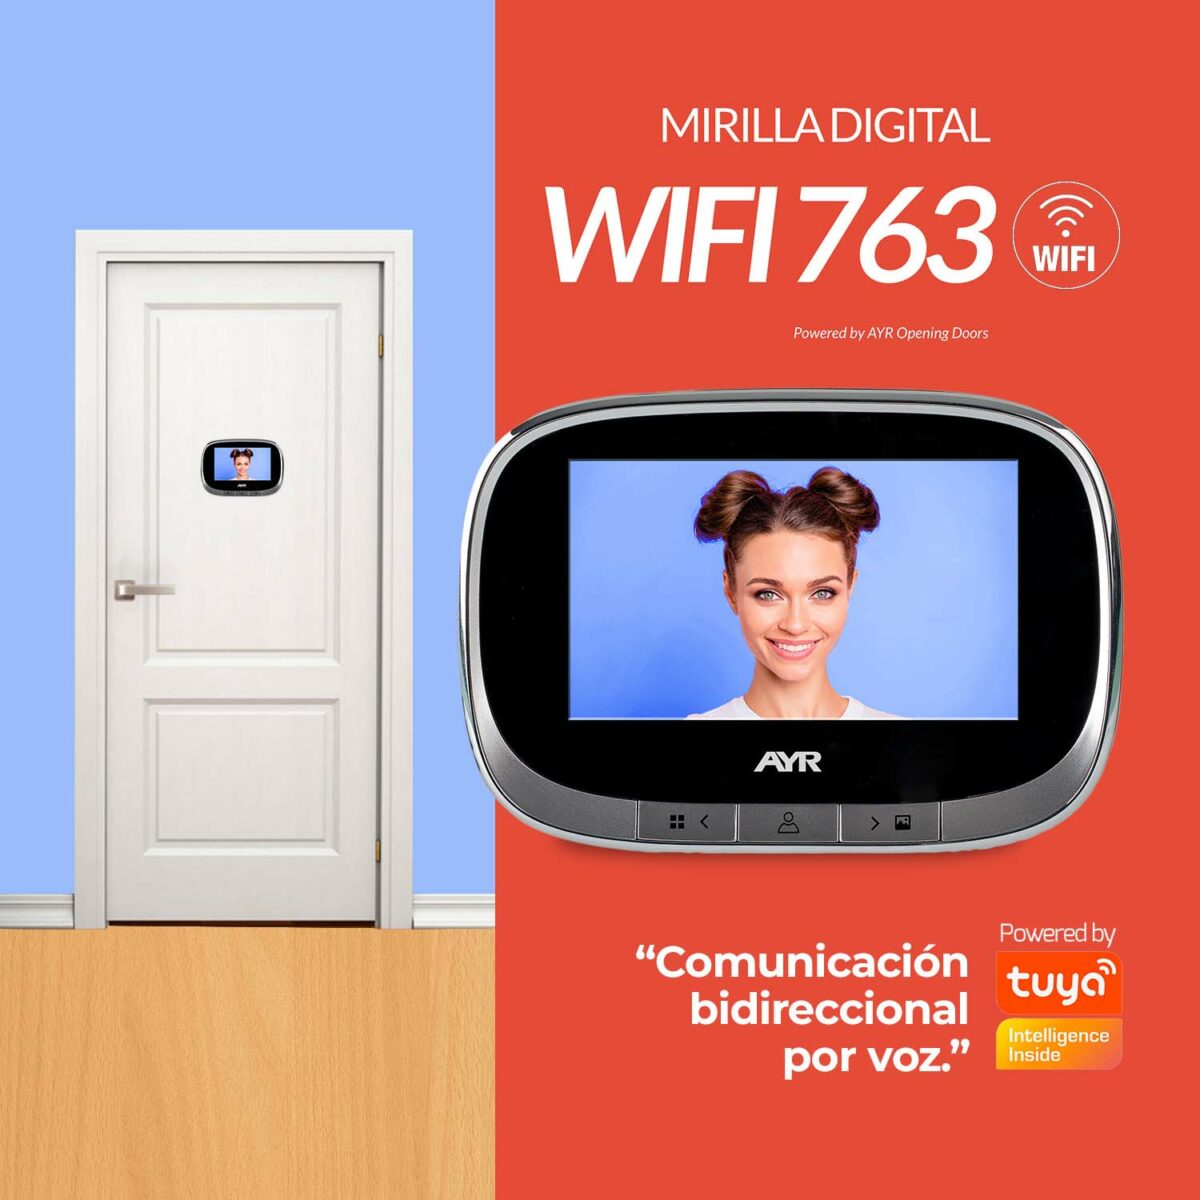 ayr_mirilla_digital_wifi_763_puerta